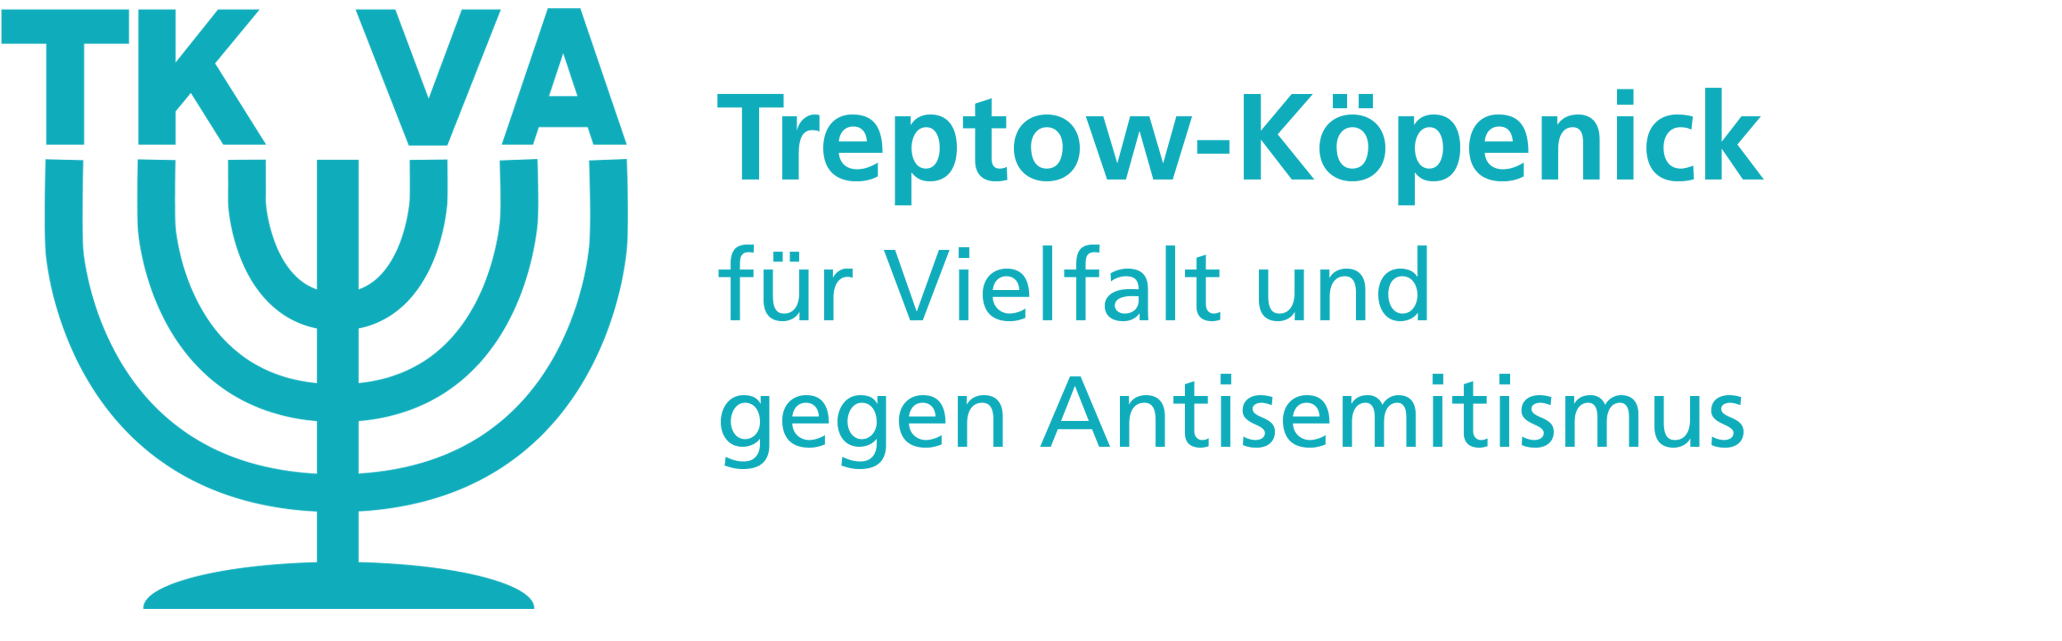 Logo TKVA Lichtenberg